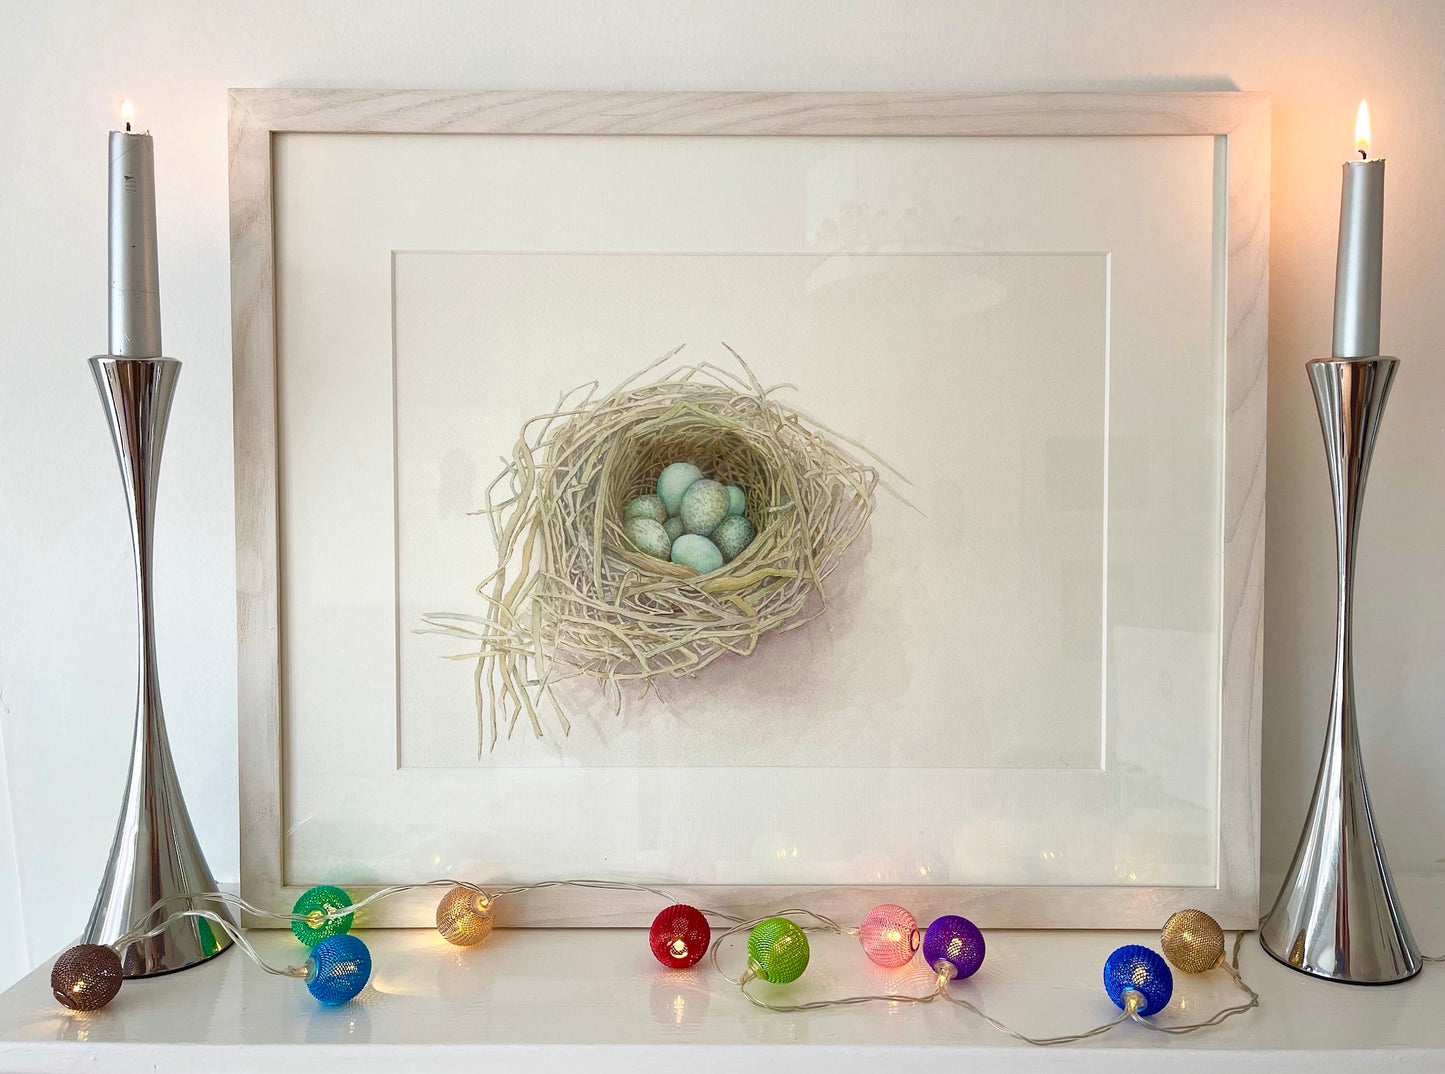 Blackbird's Nest, Fine Art Giclee Limited Edition Print